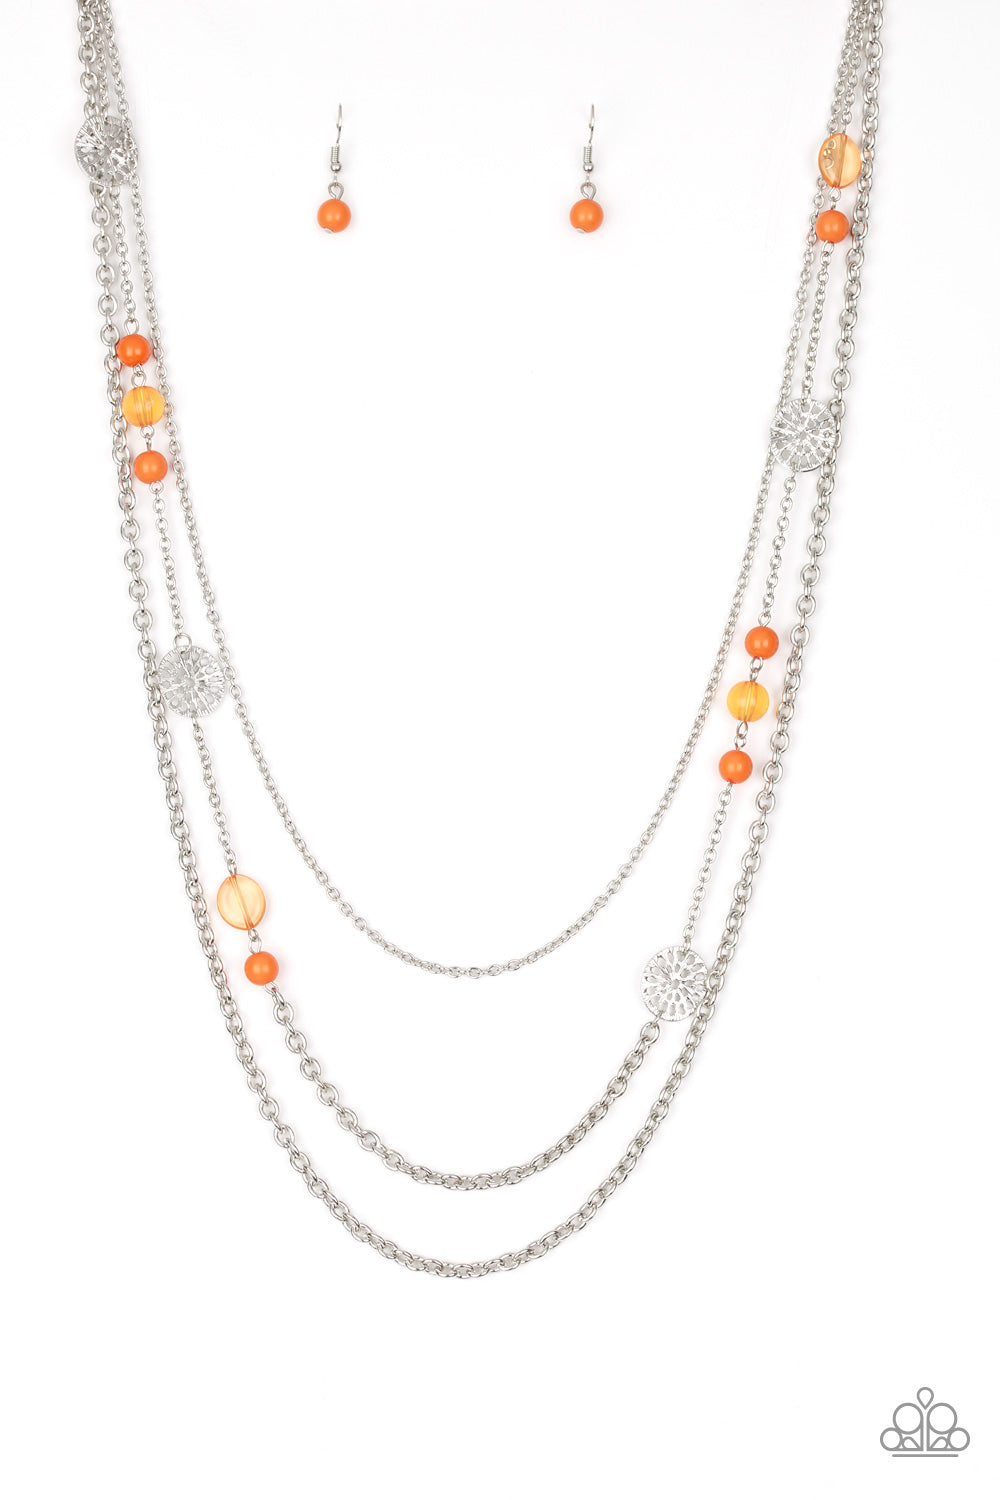 Paparazzi Pretty Pop-tastic! Orange Long Necklace